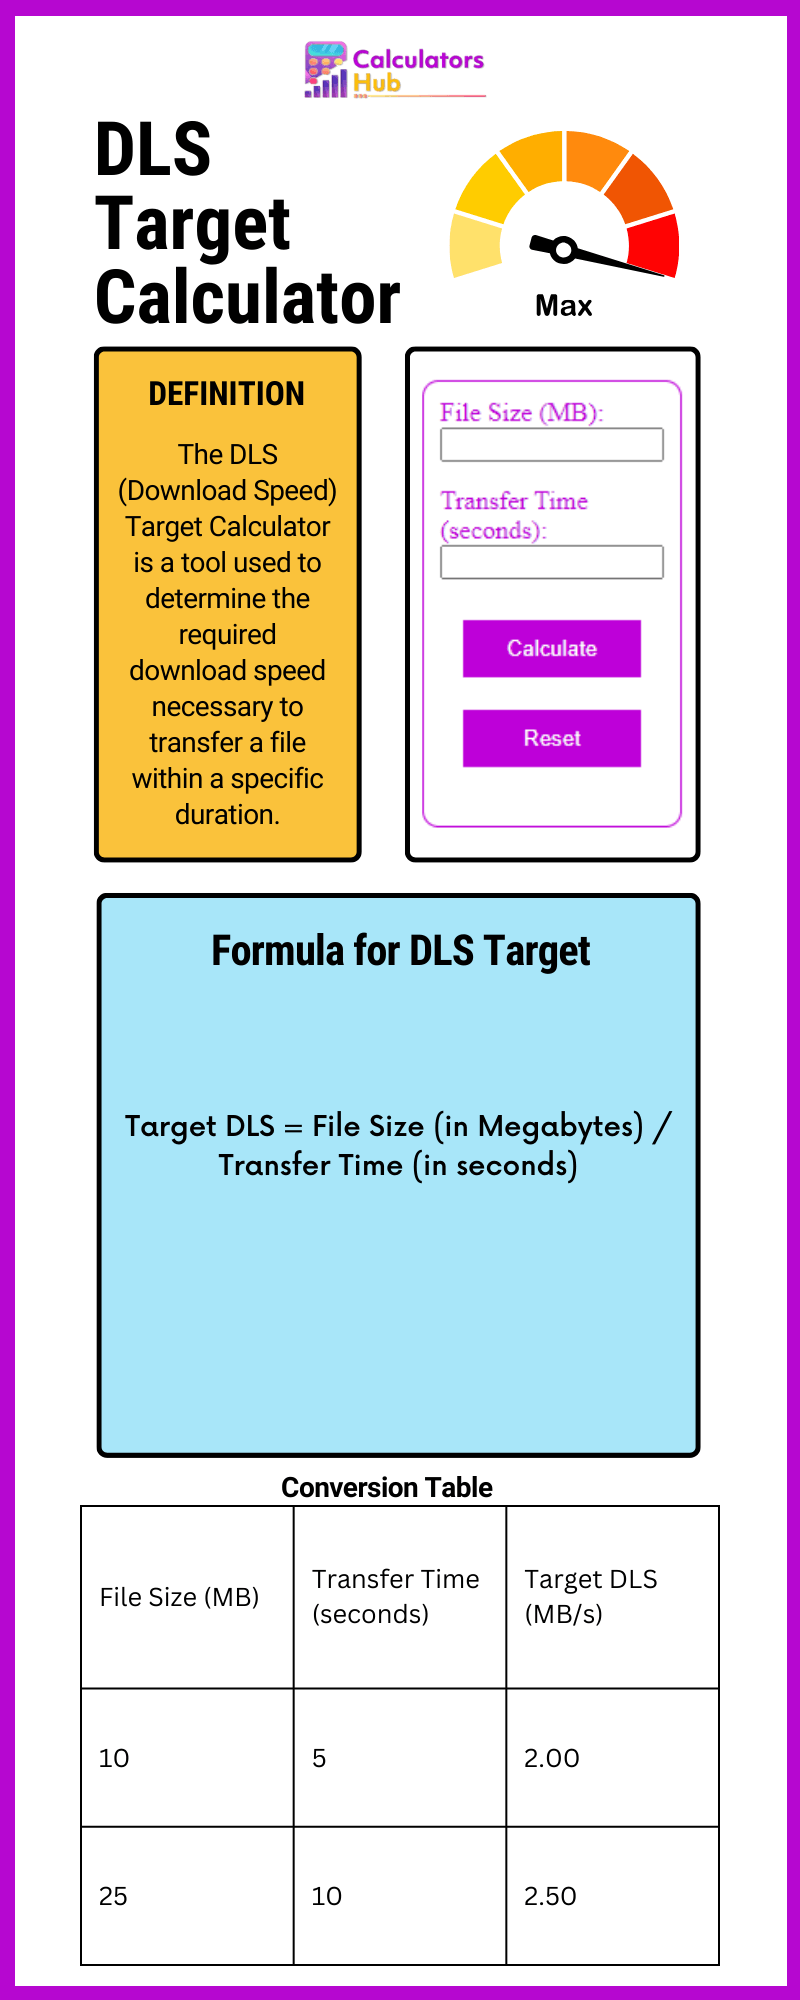 DLS Target Calculator